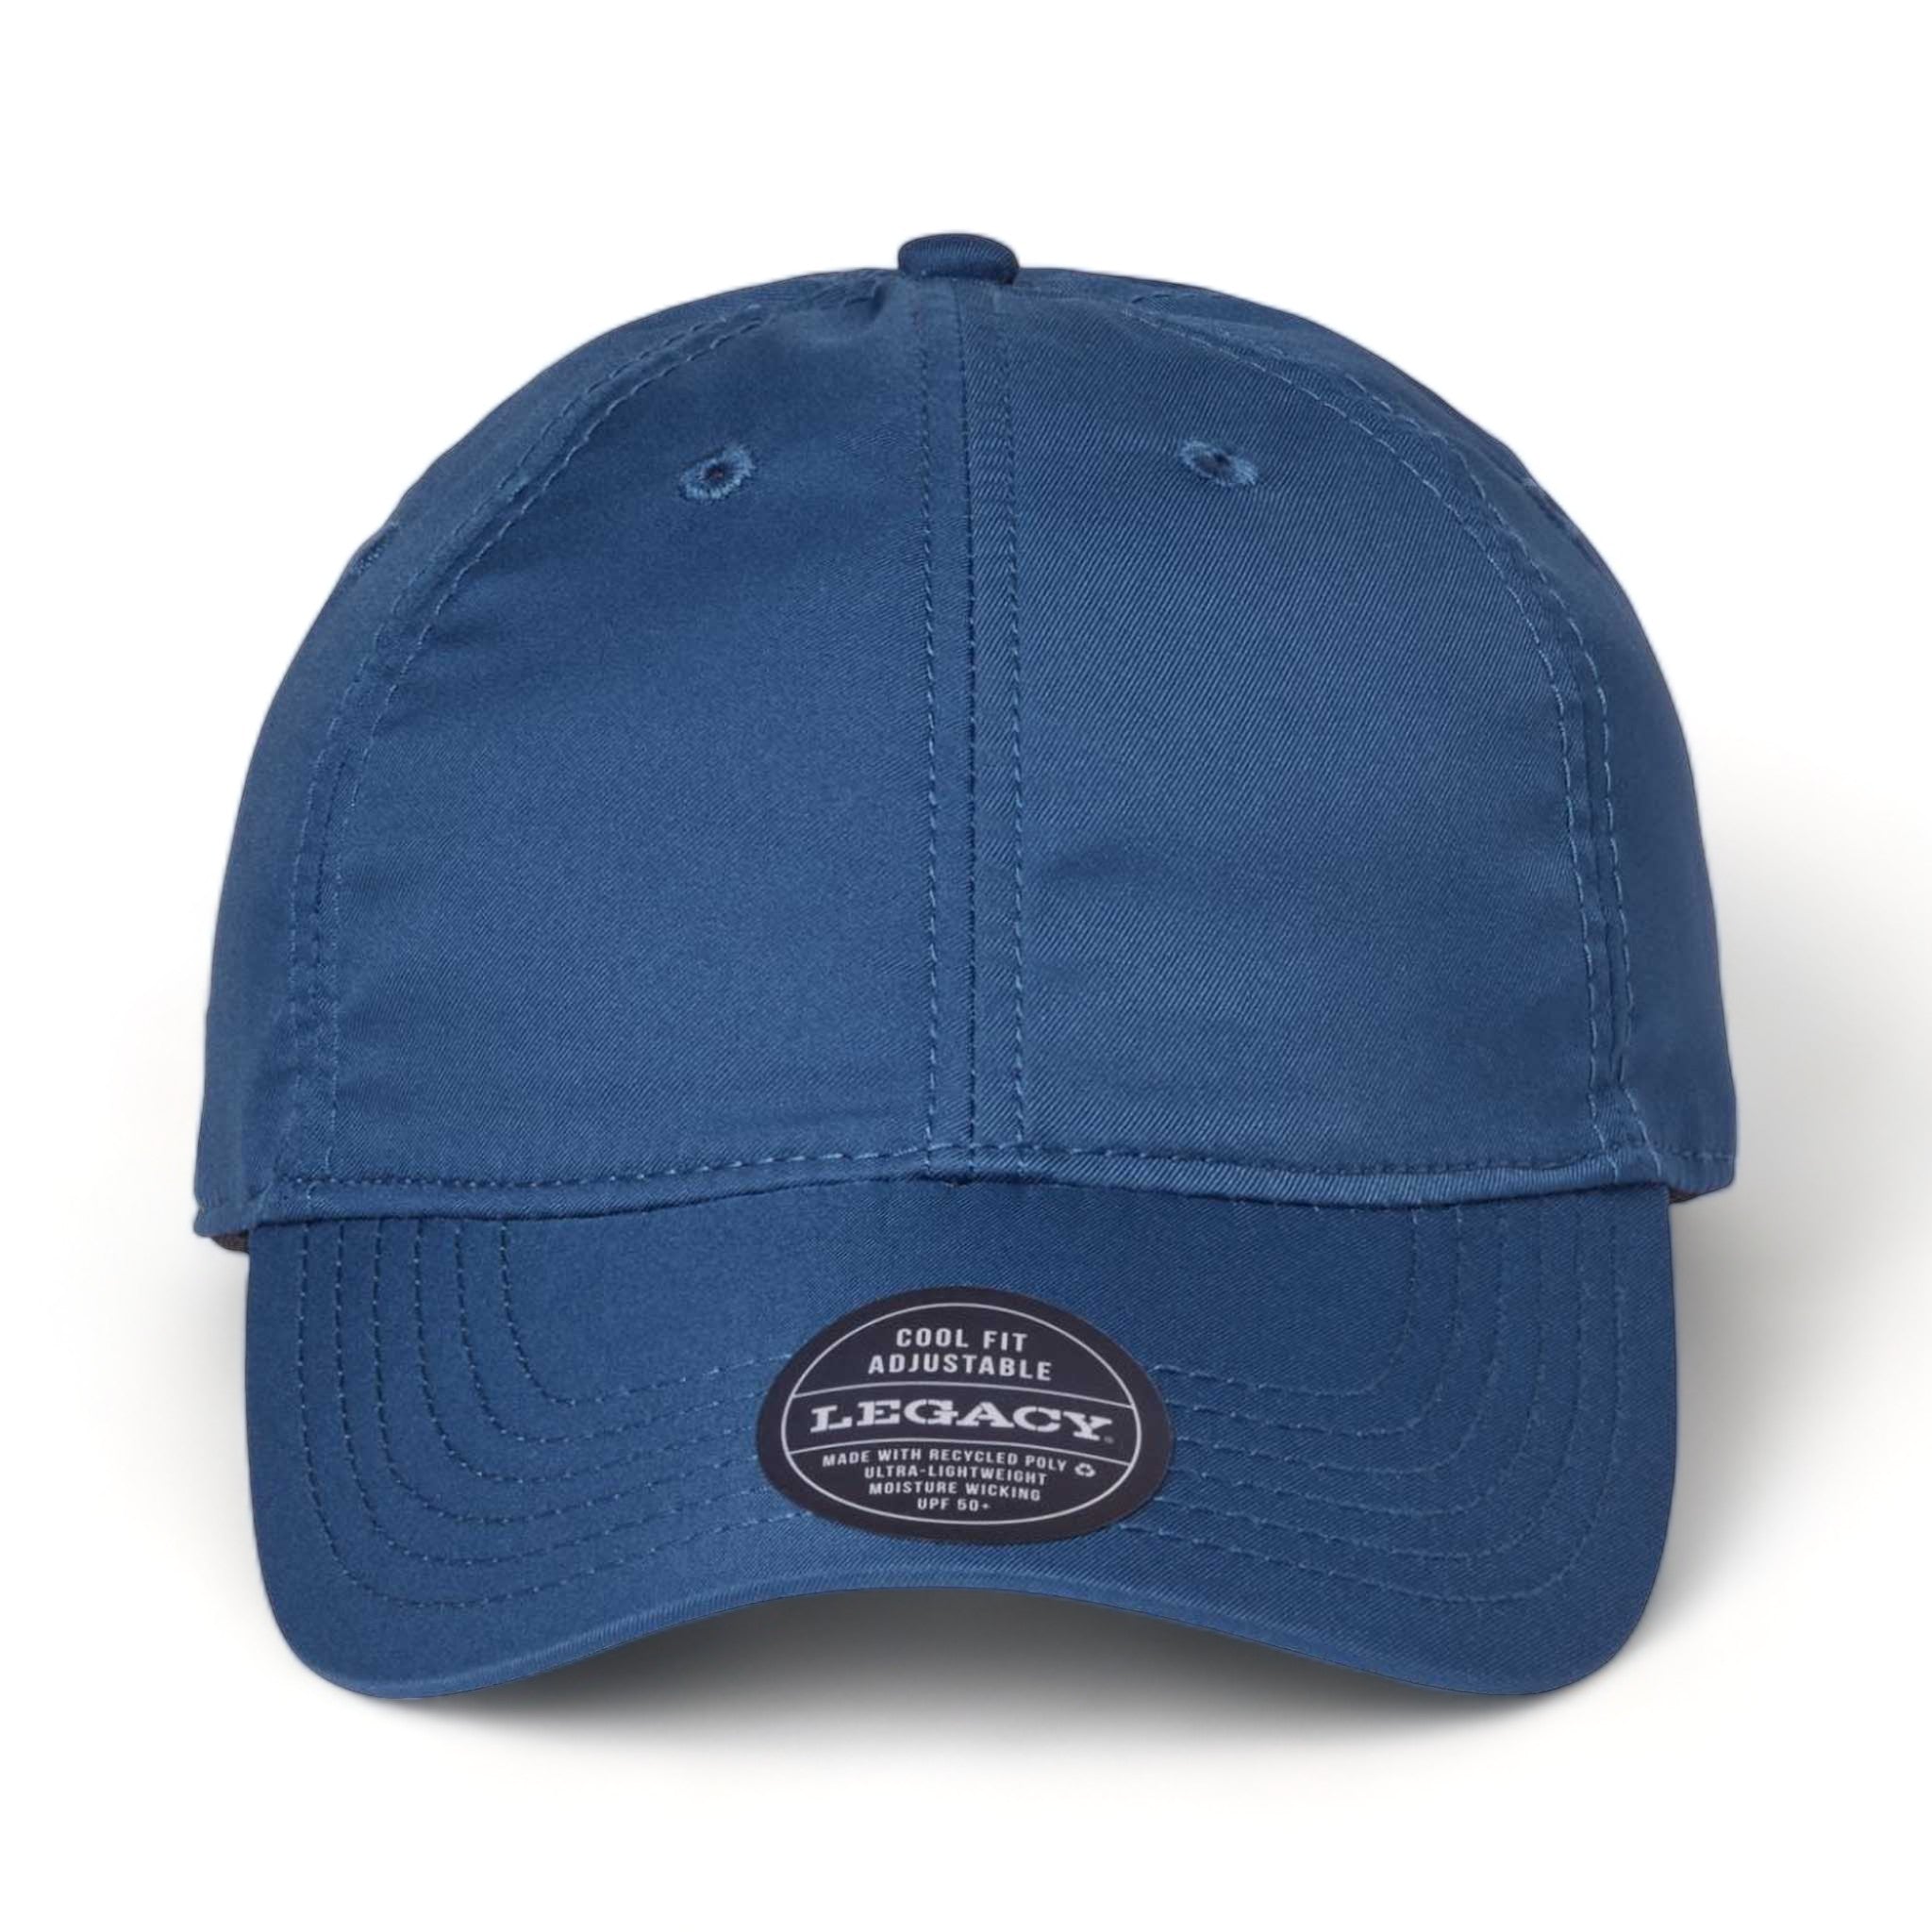 Front view of LEGACY CFA custom hat in dark blue